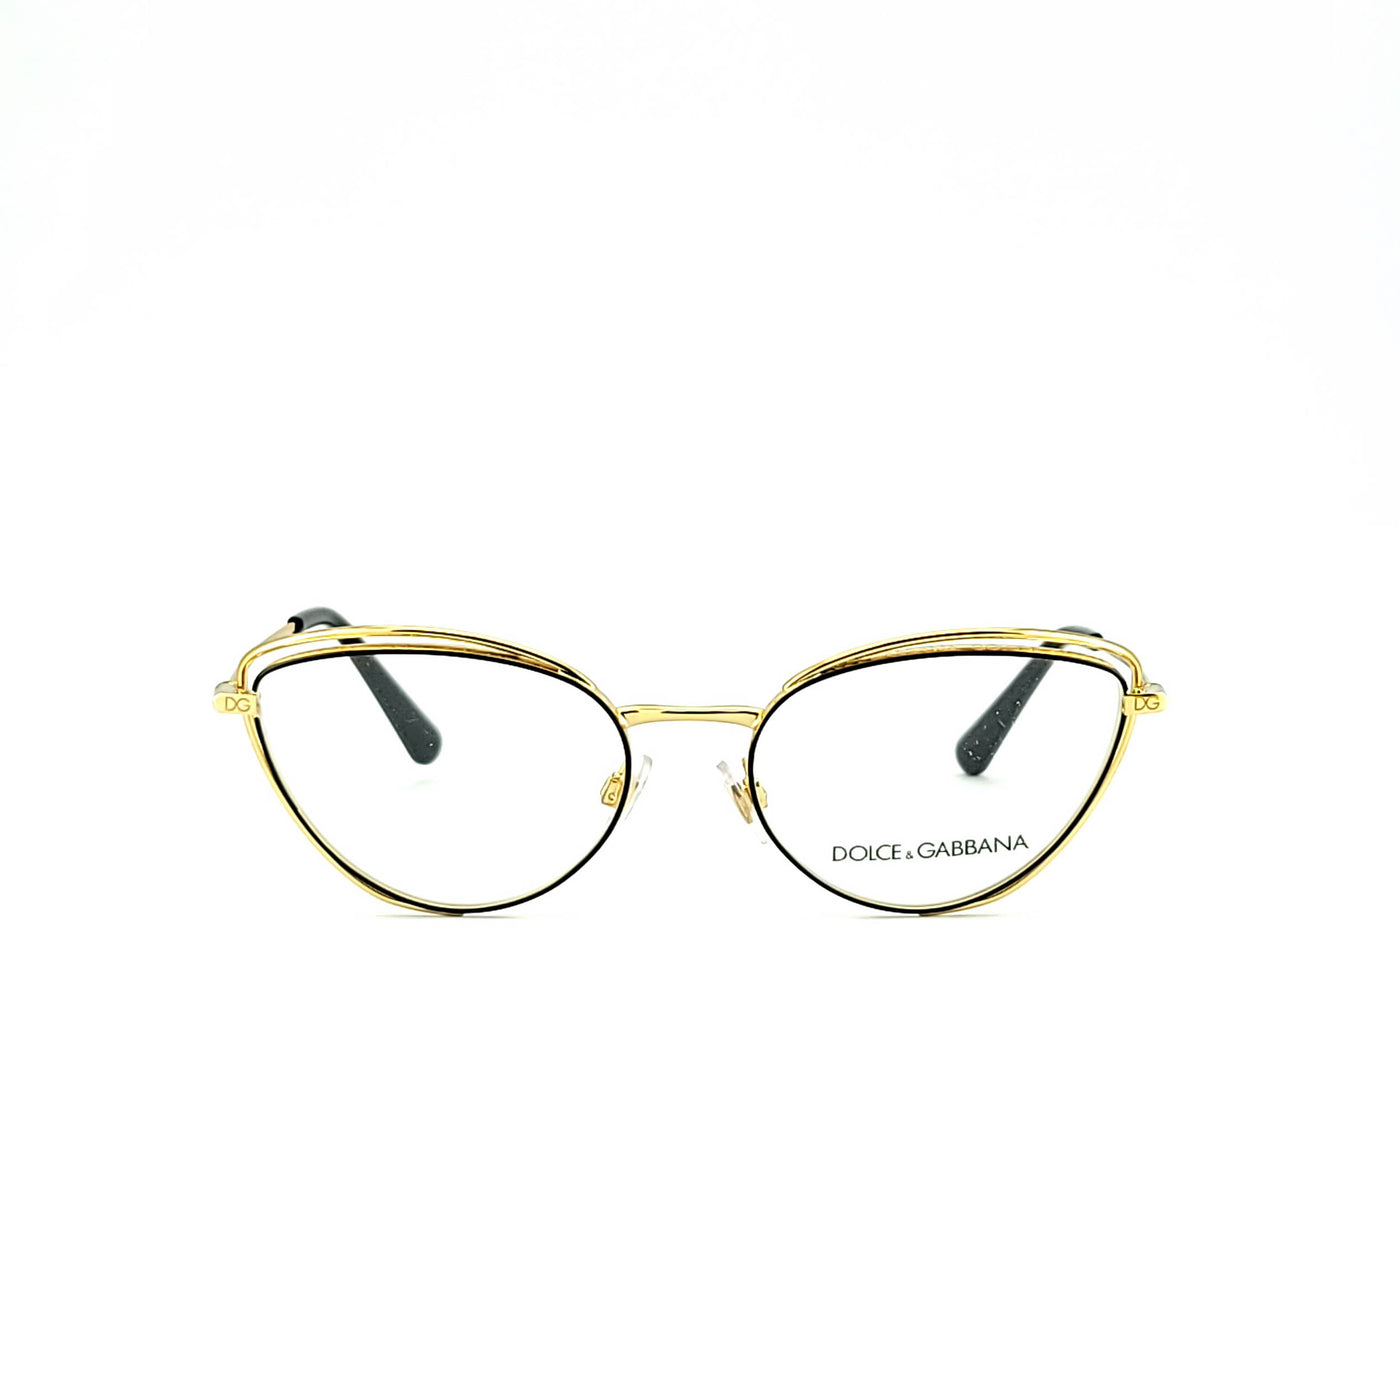 Dolce & Gabbana DG1326/1334 | Eyeglasses with FREE Anti Radiation Lenses - Vision Express Optical Philippines